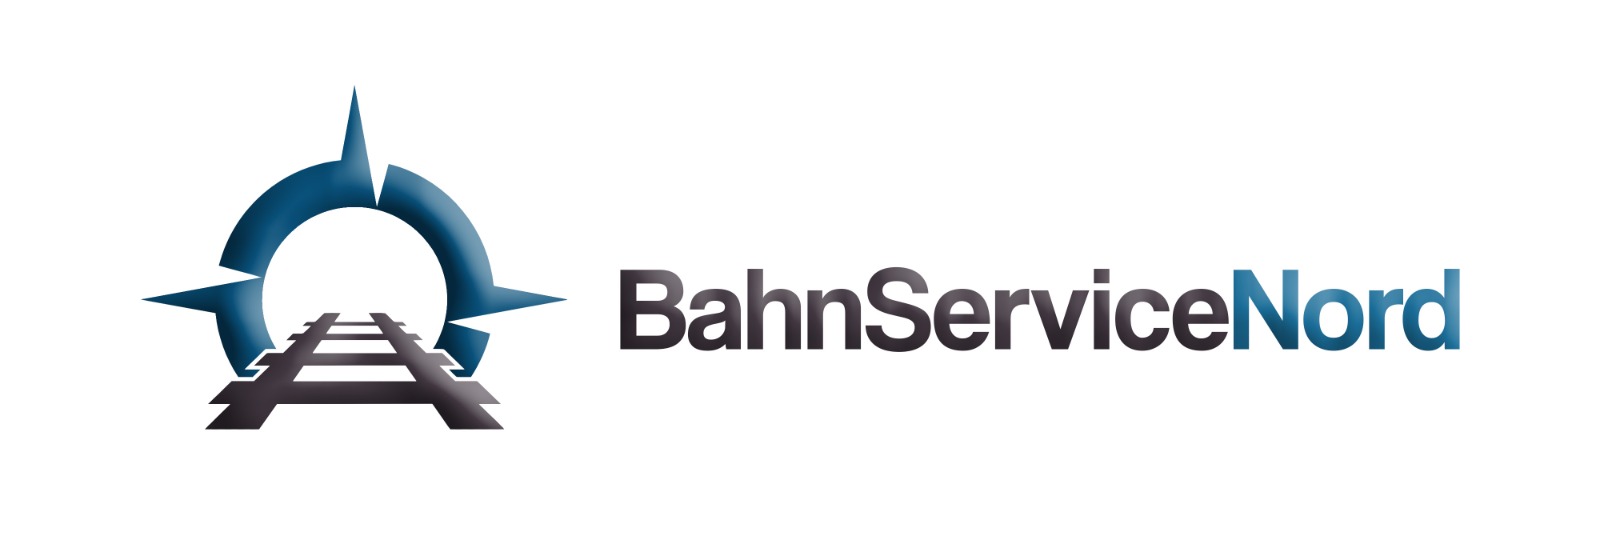 BSN – Bahnservice-Nord Logo